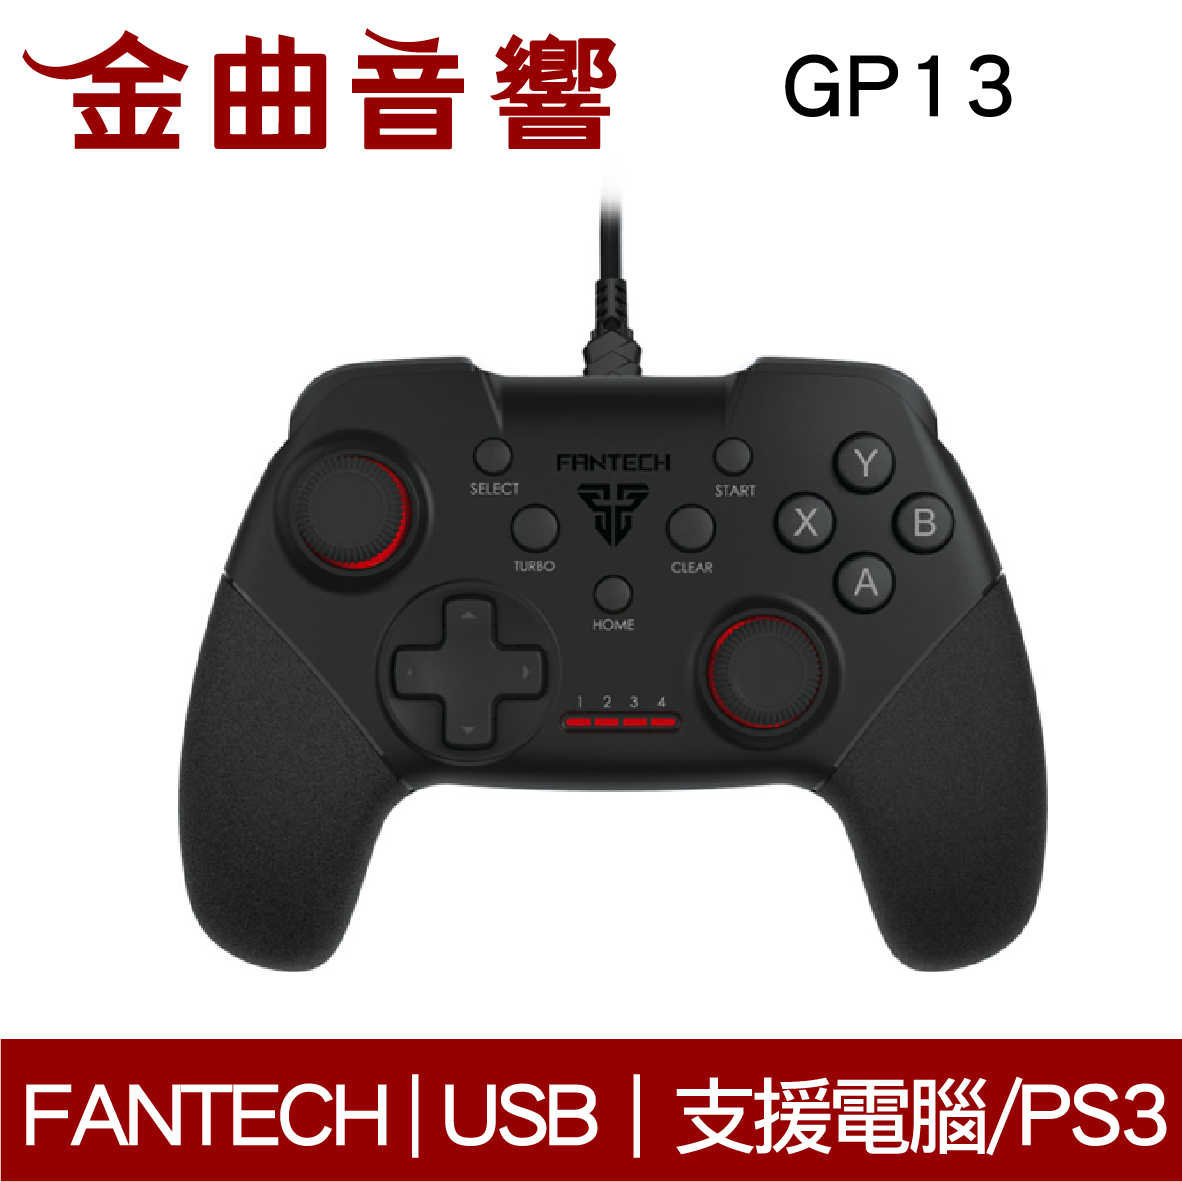 FANTECH GP13 USB 震動 適用PC/PS3 人體工學 遊戲 控制 手把 搖桿 | 金曲音響